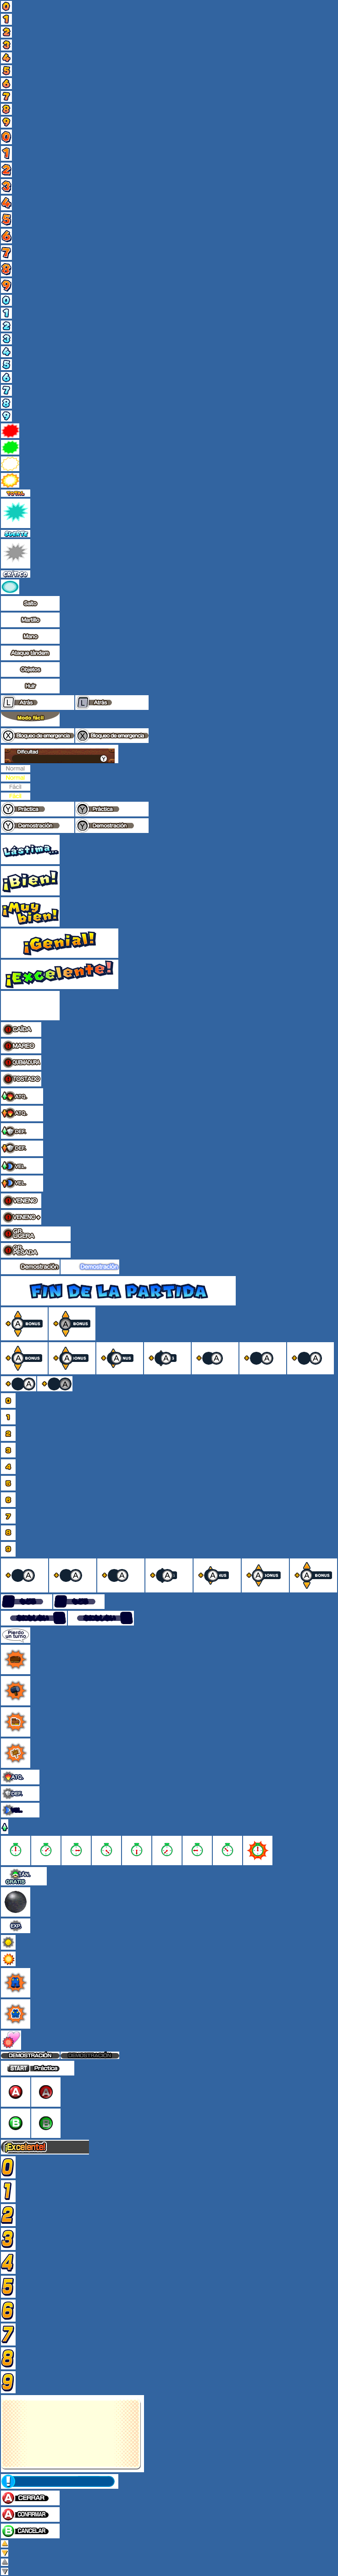 Battle UI (Spanish)